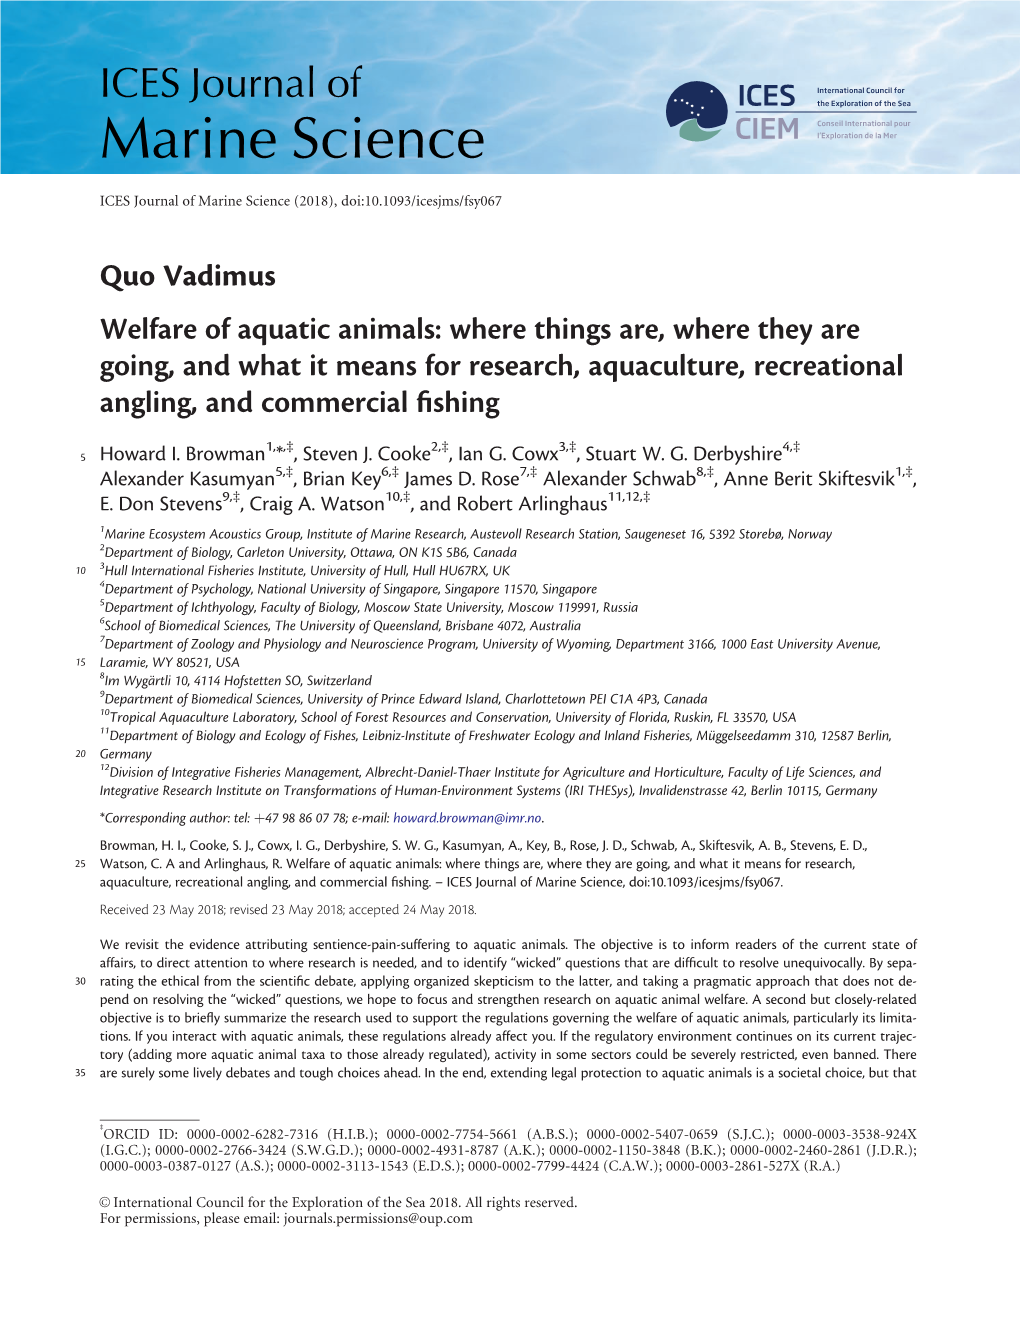 Quo Vadimus Welfare of Aquatic Animals: Where Things Are, Where